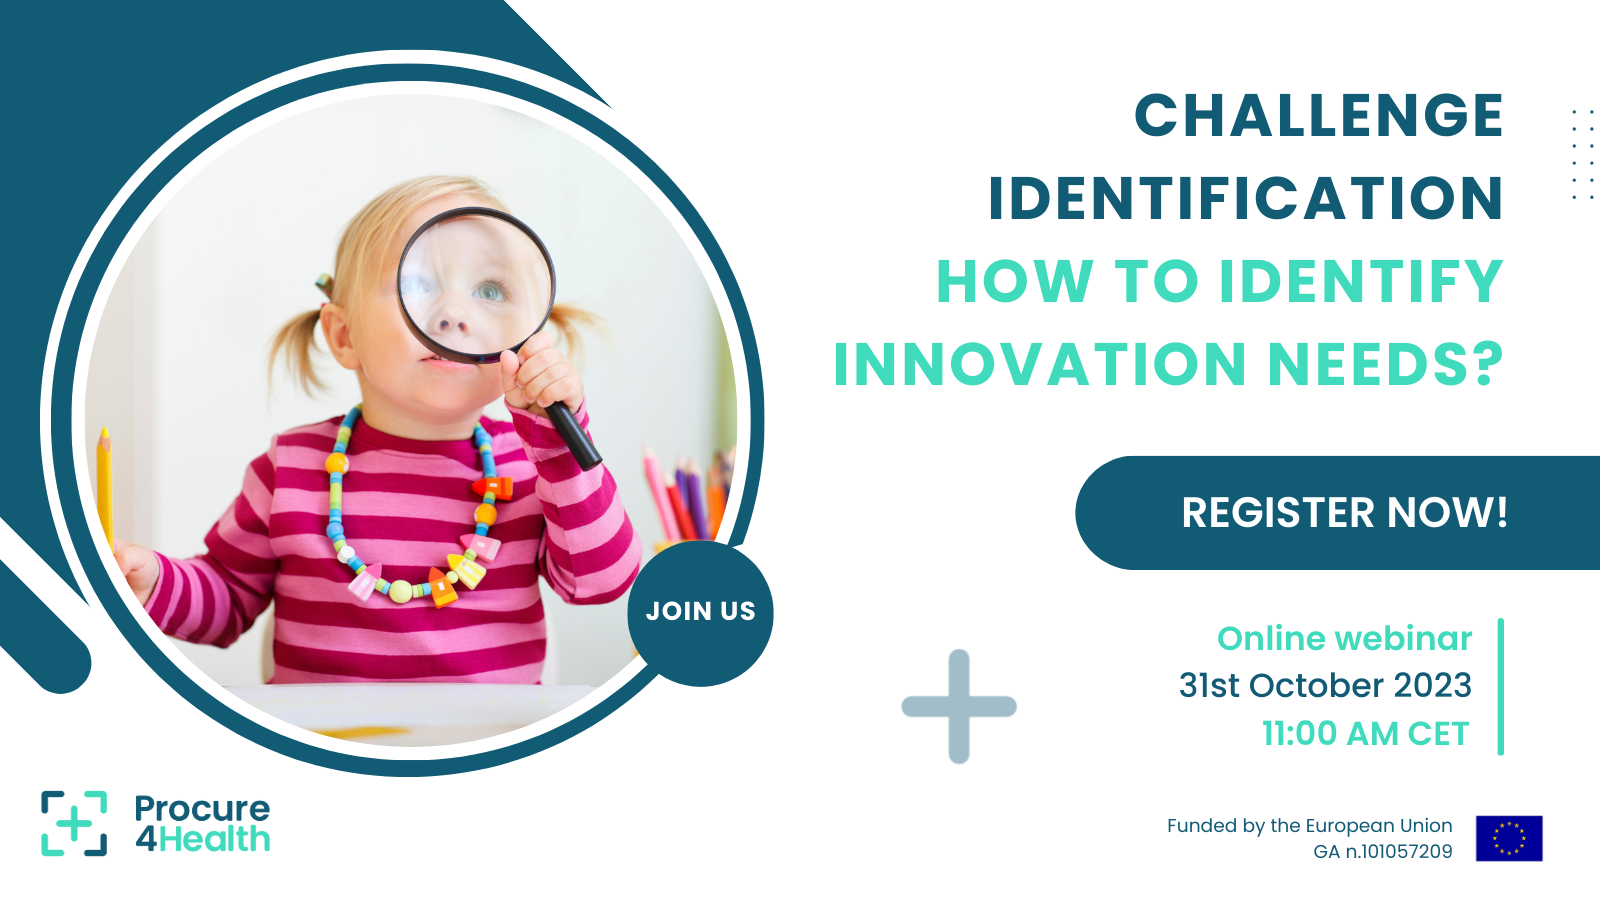 Challenge identification: How to identify innovation needs?